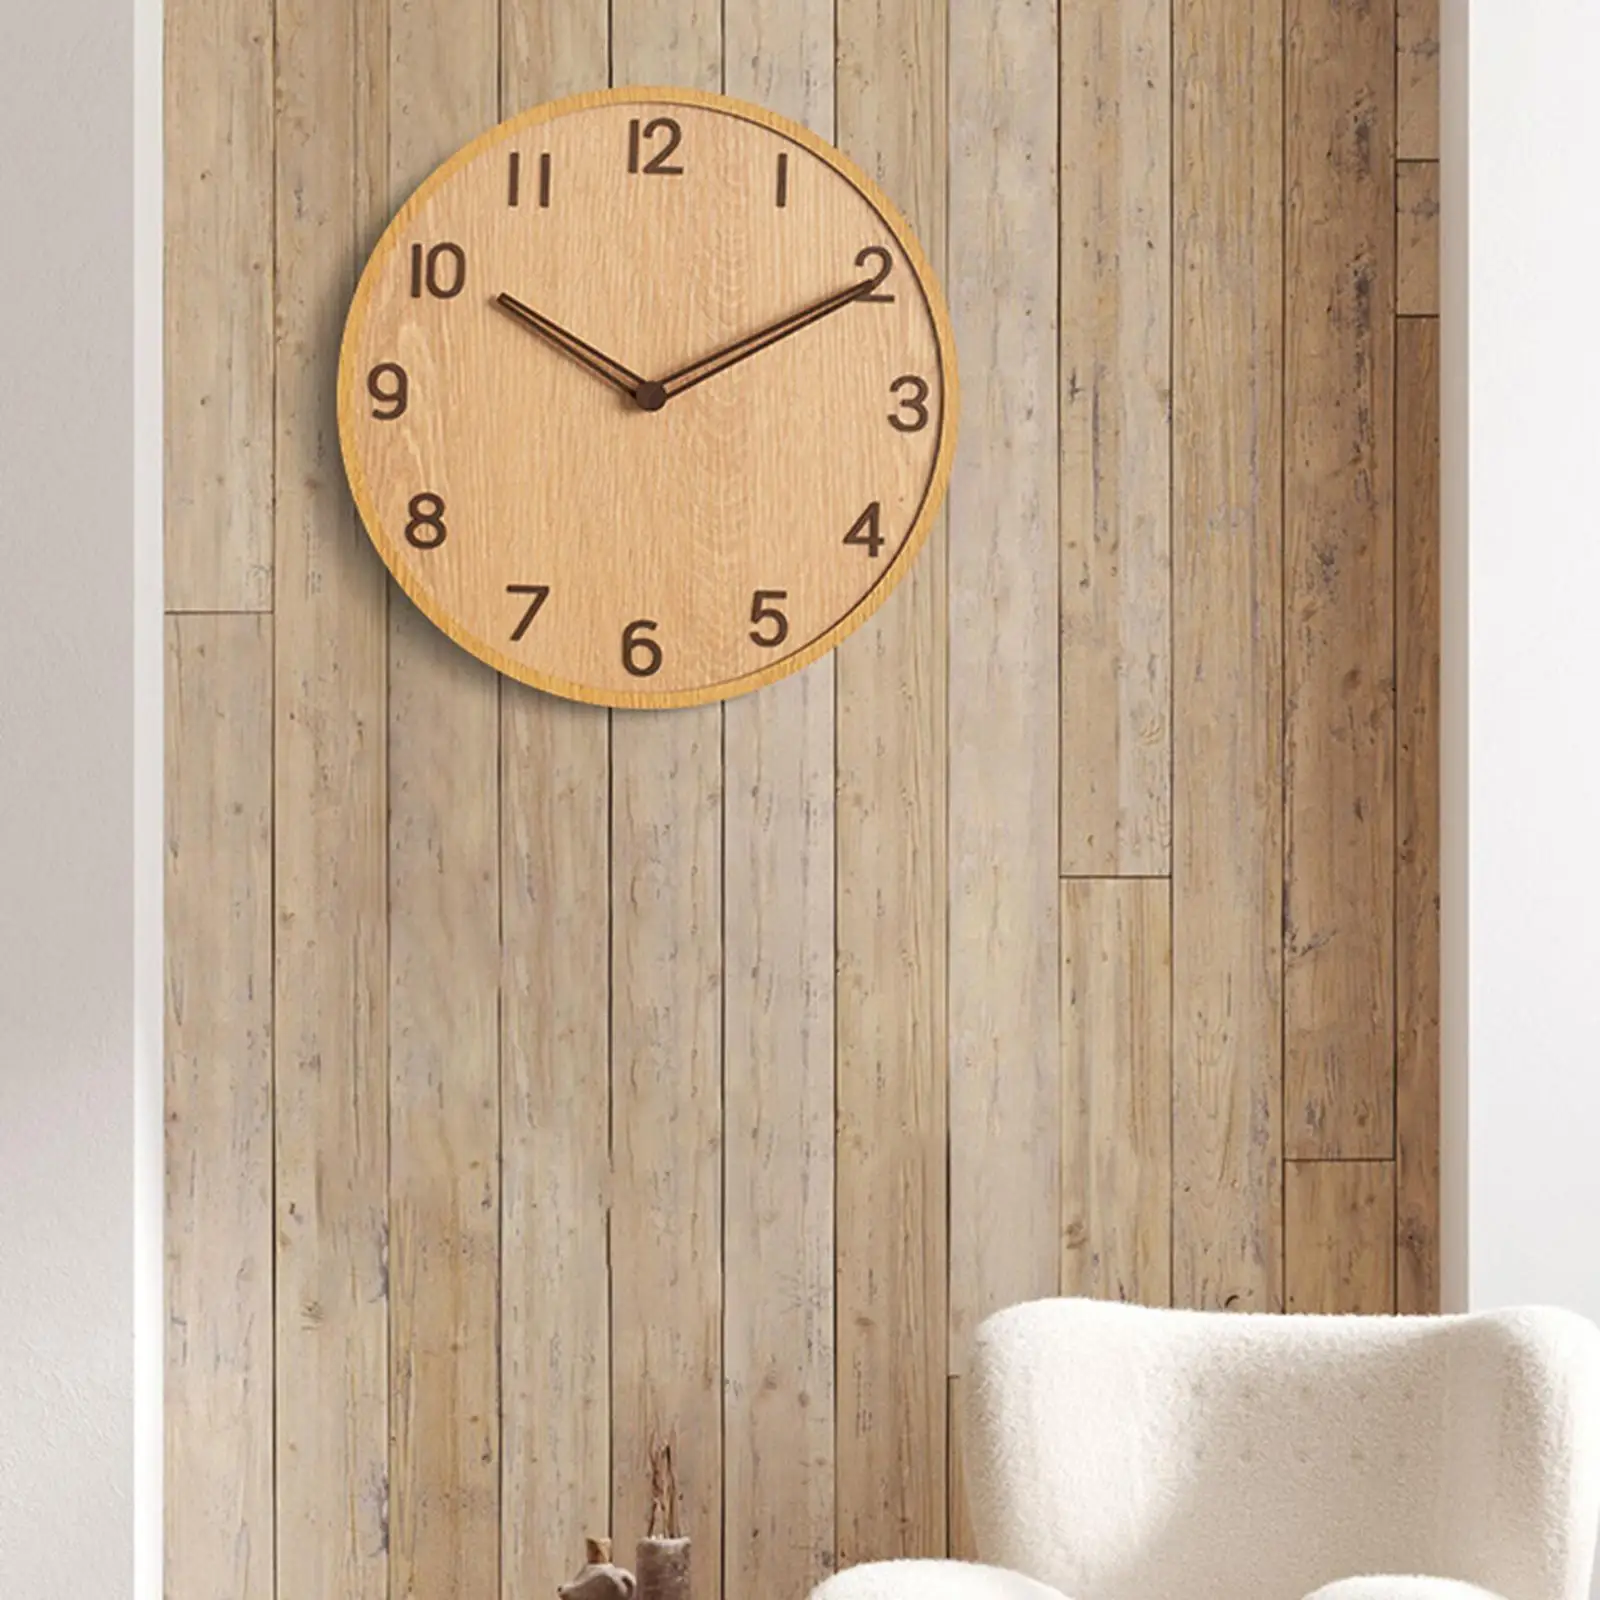 Nordic Wooden Wall Clock Silent Art Decorative for Home Bathroom Classroom Office Indoor